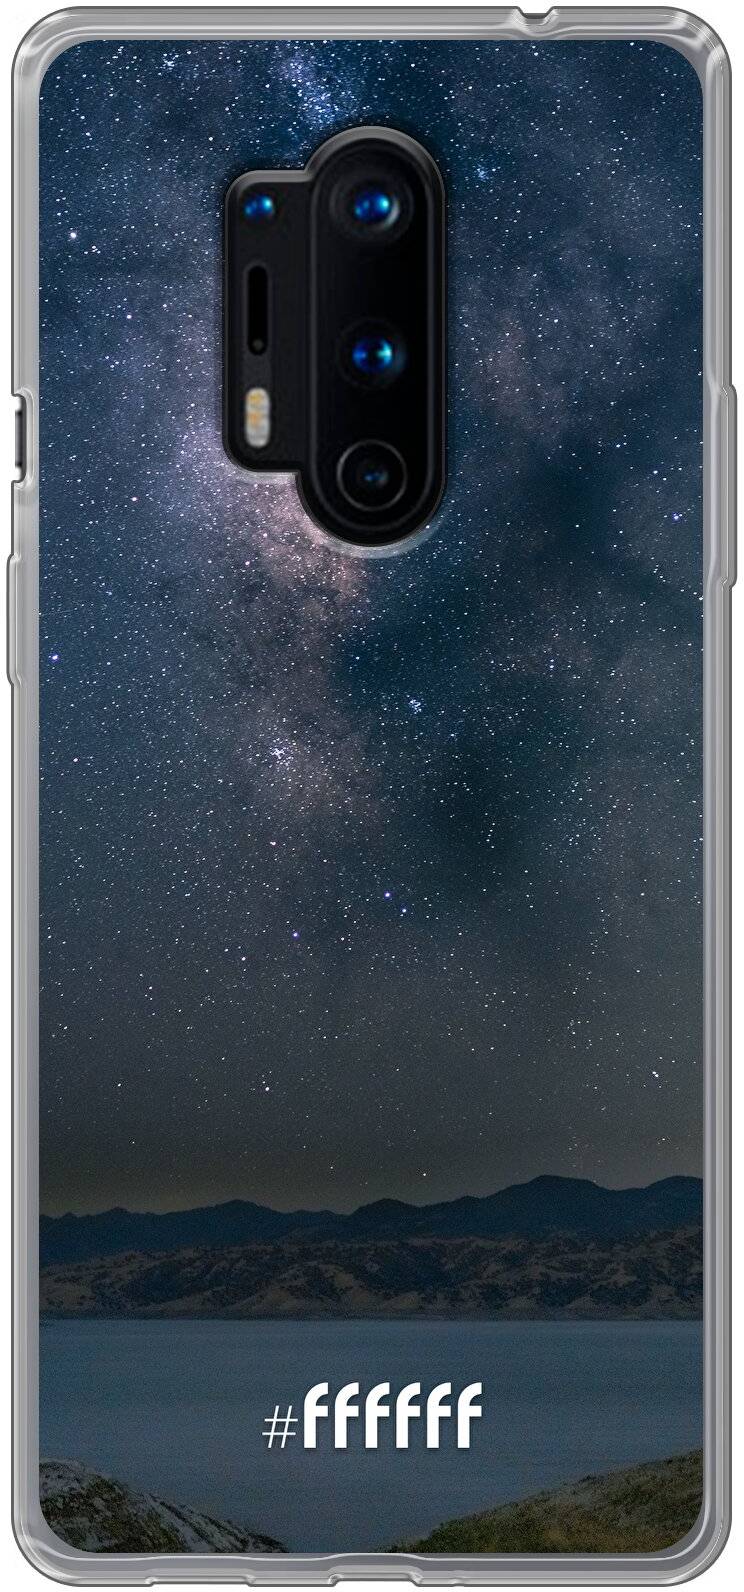 Landscape Milky Way 8 Pro